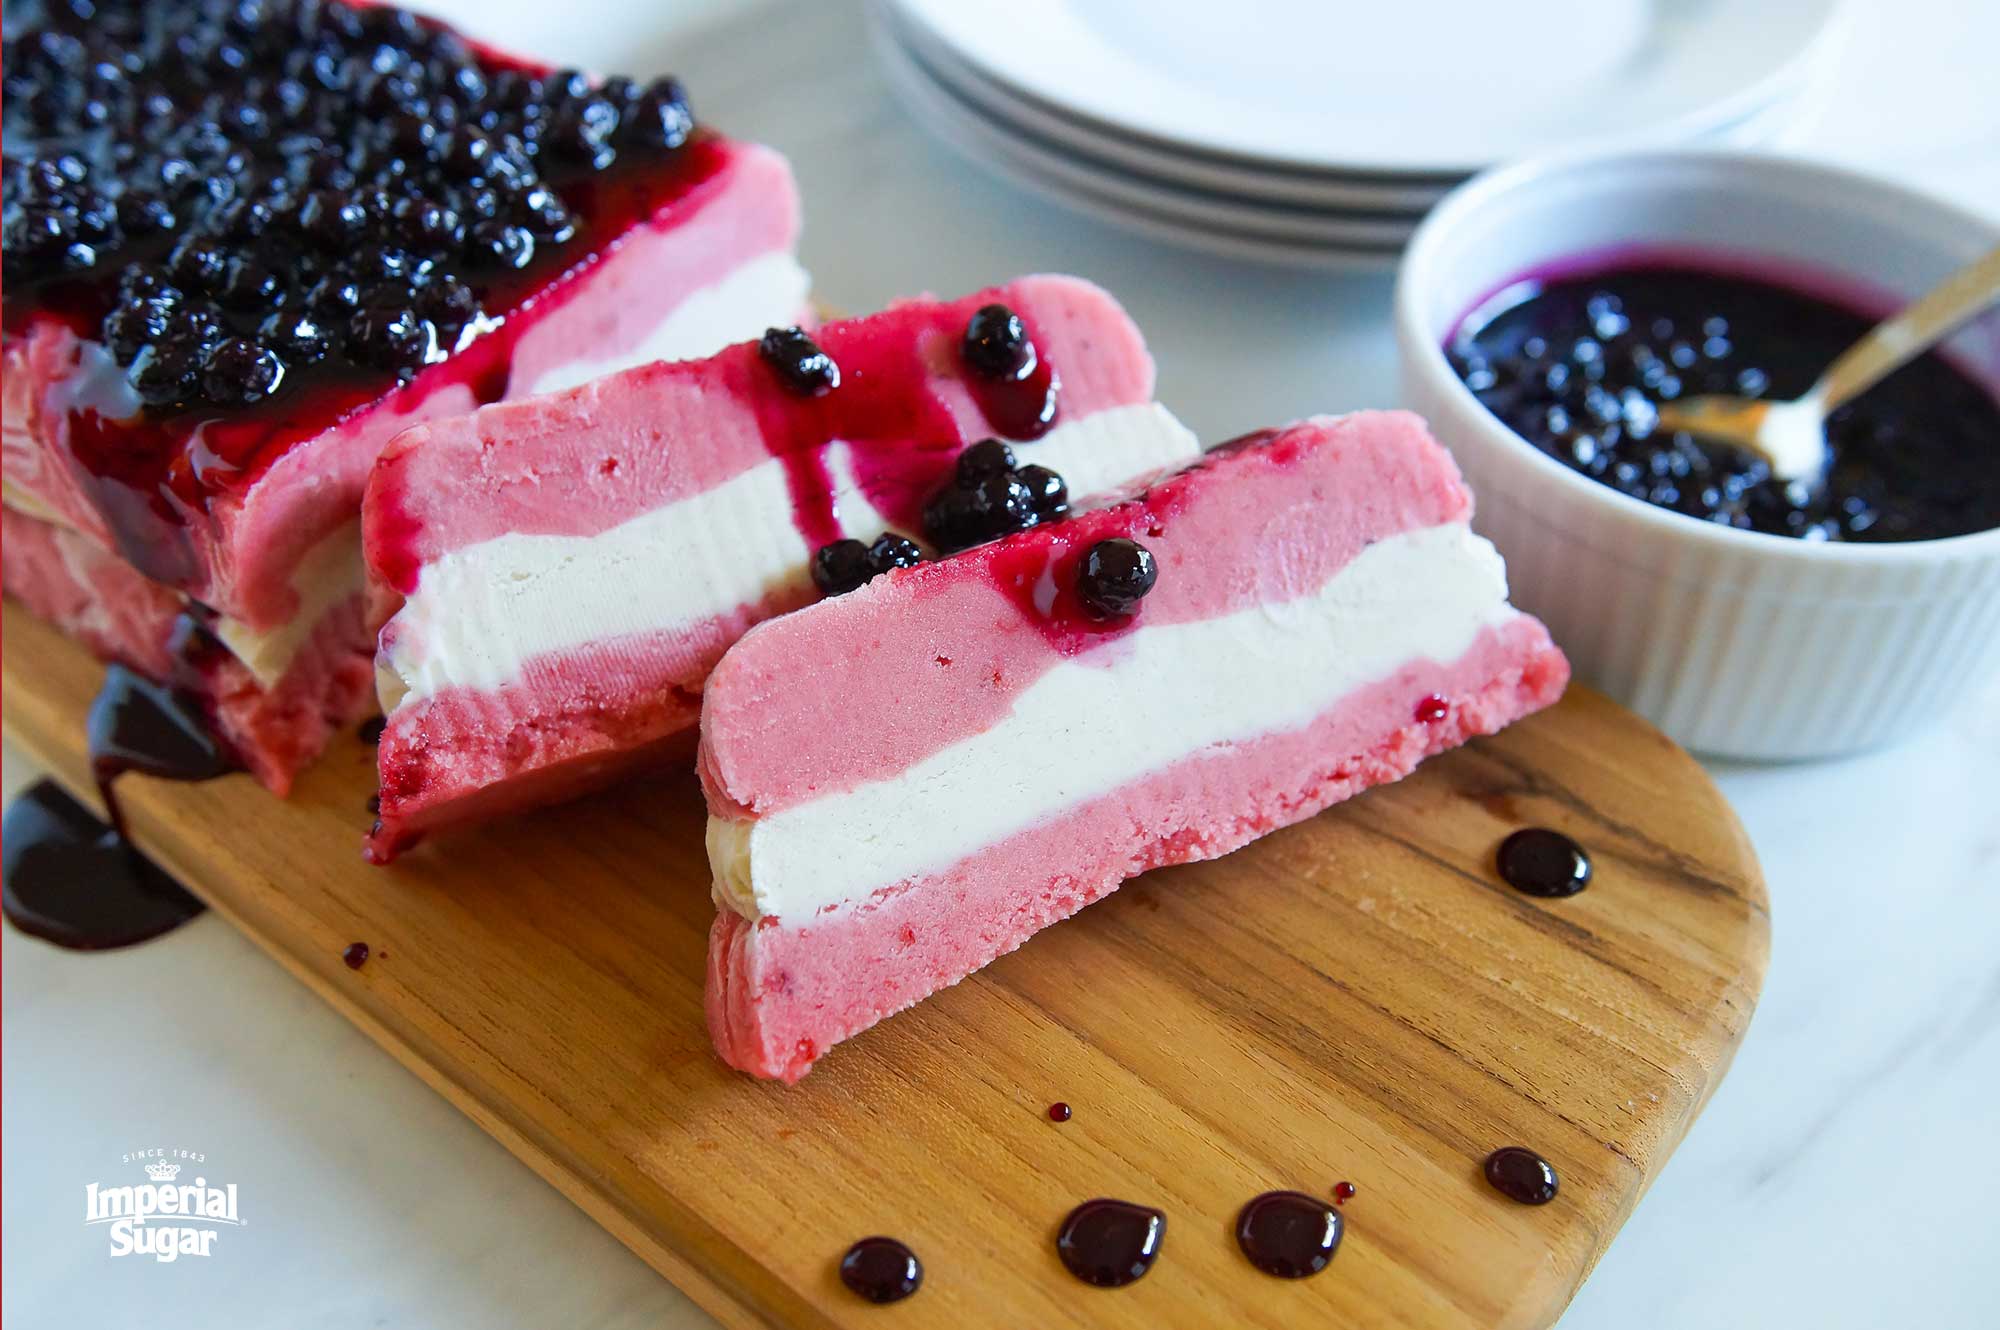 Blueberry and jersey milk ice cream cake - Recipes - delicious.com.au